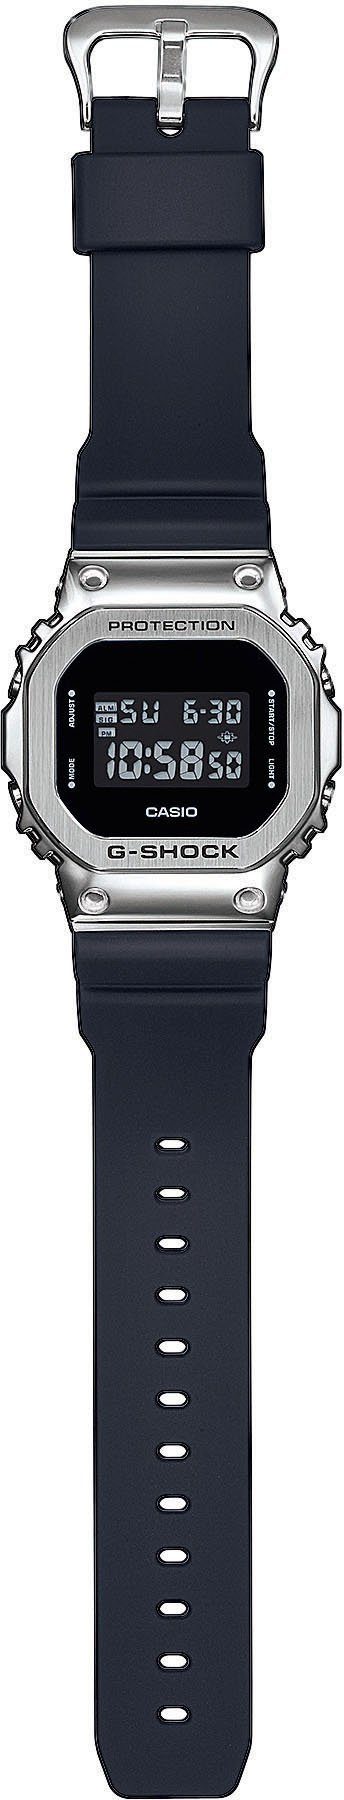 CASIO G-SHOCK GM-5600-1ER Chronograph